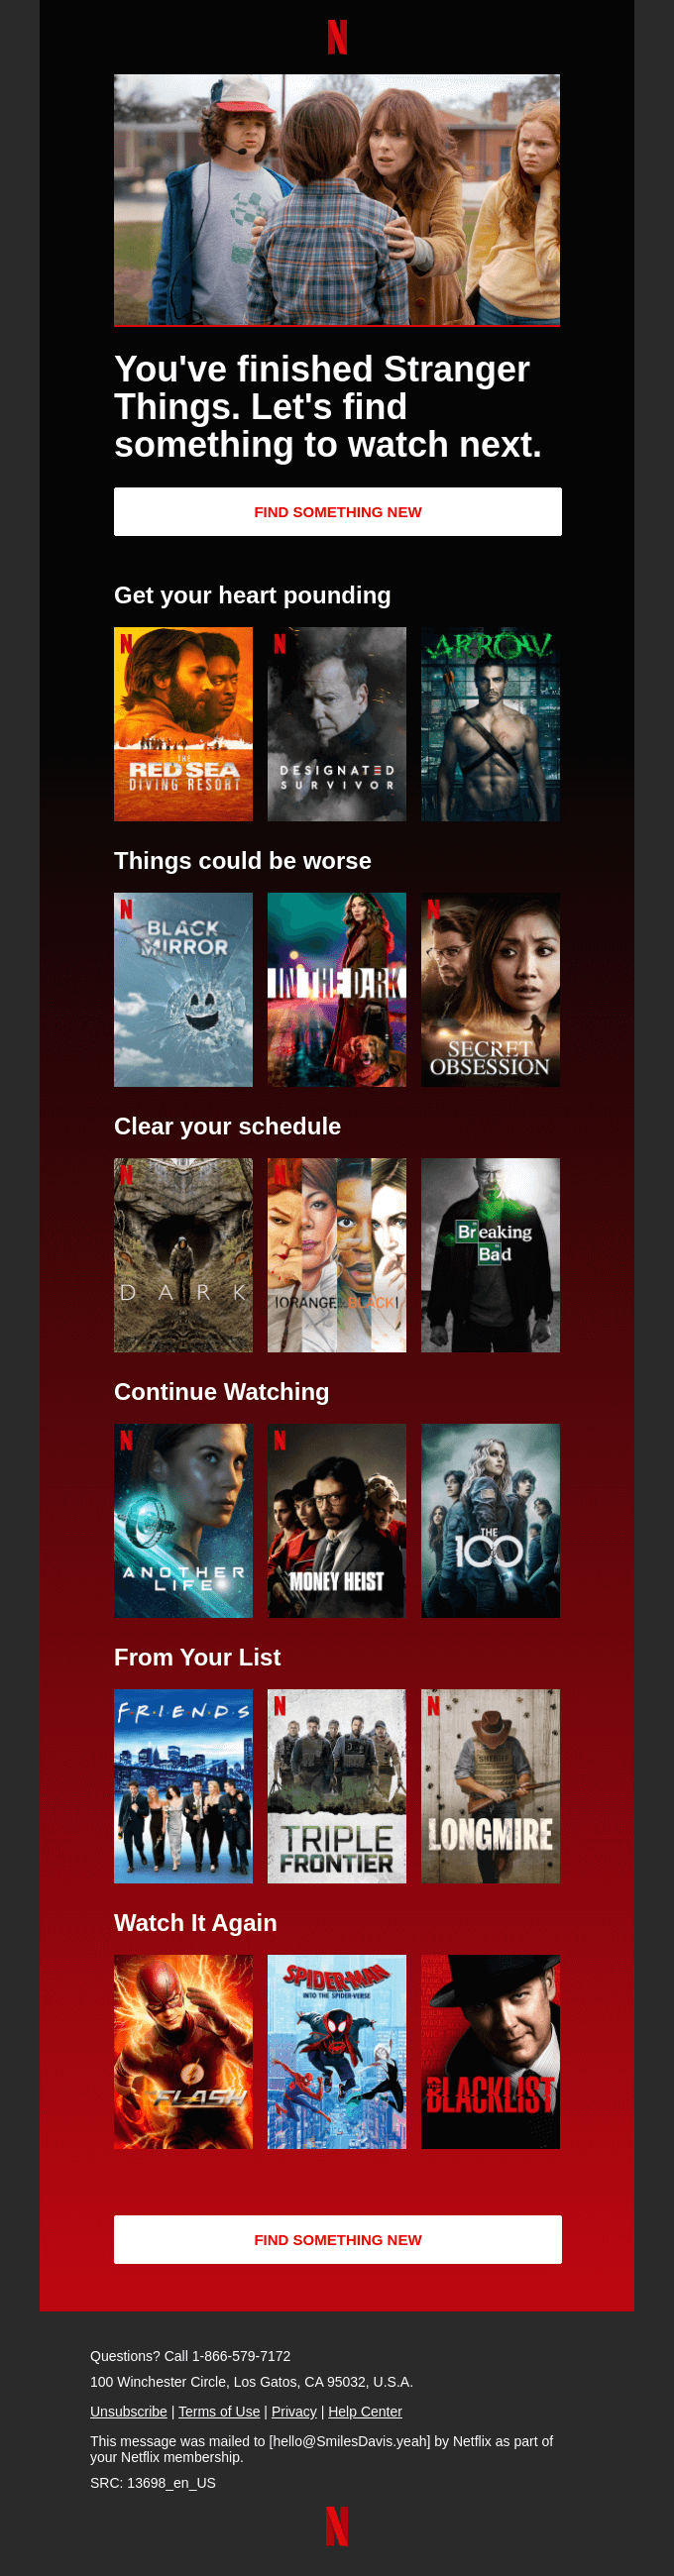 Netflix recommending programs similar to Stranger Things email